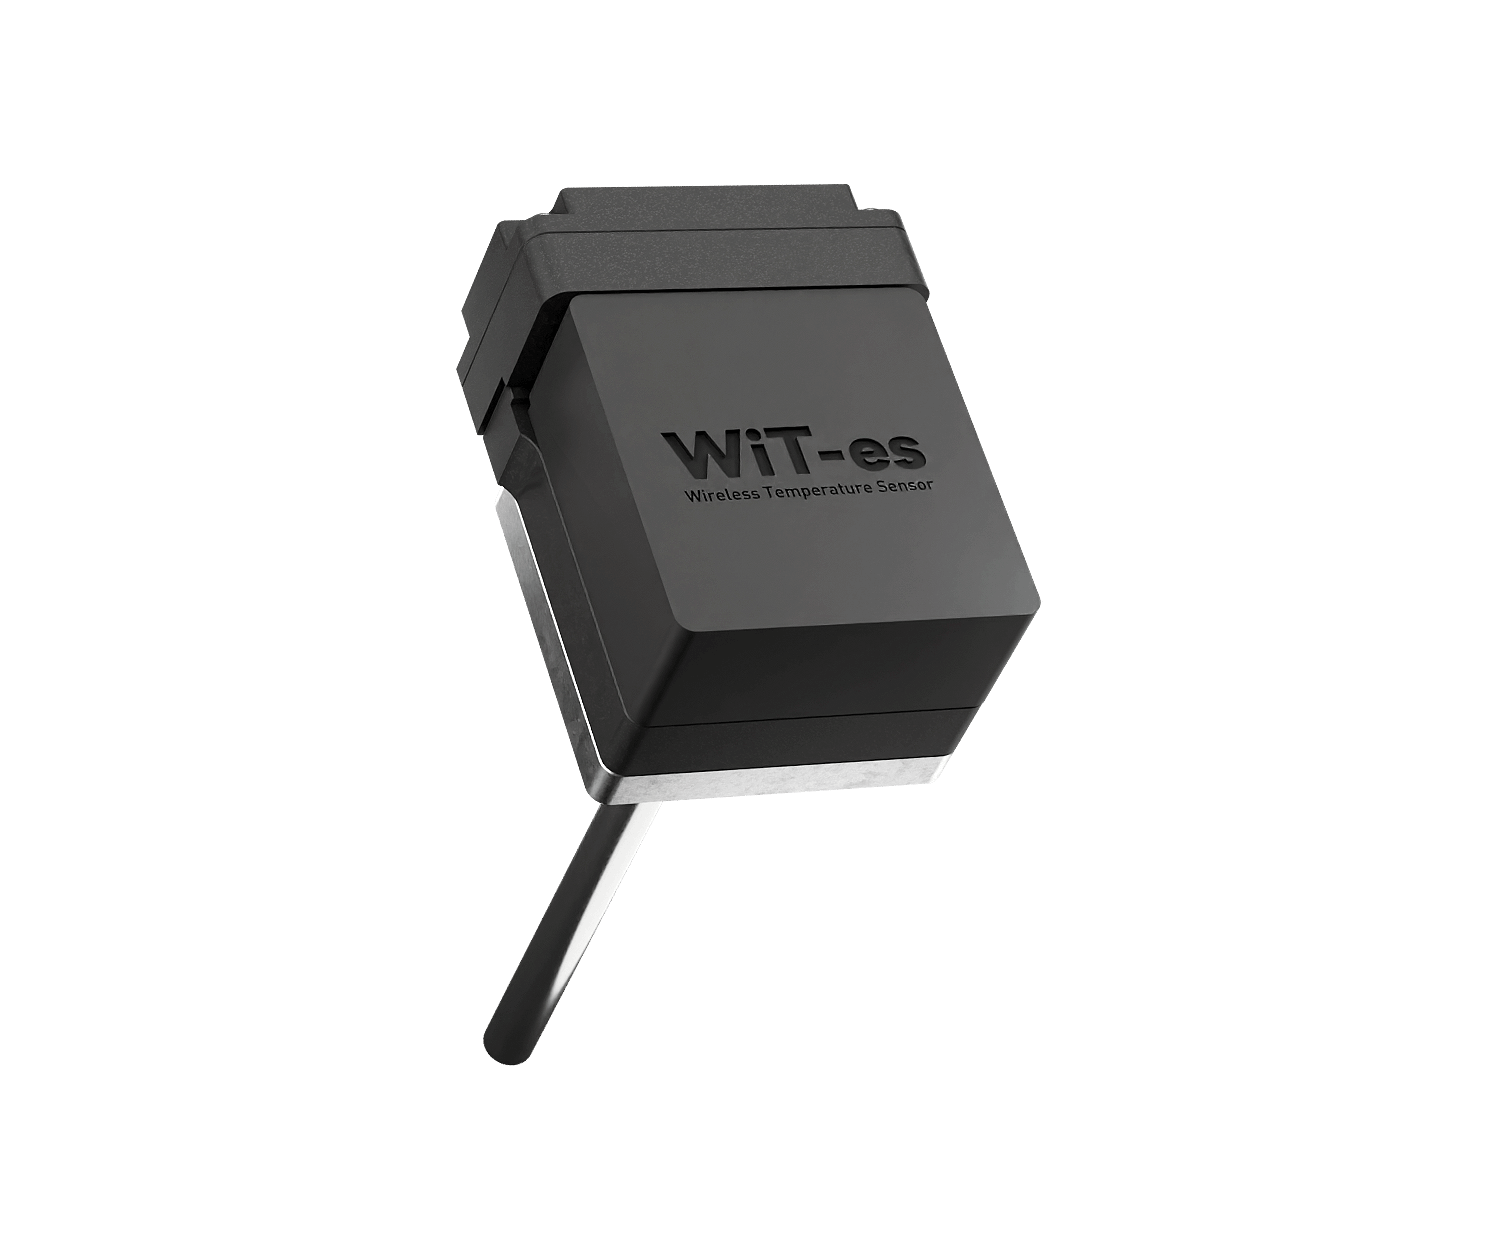 Wit-es • Wireless Temperature Sensor